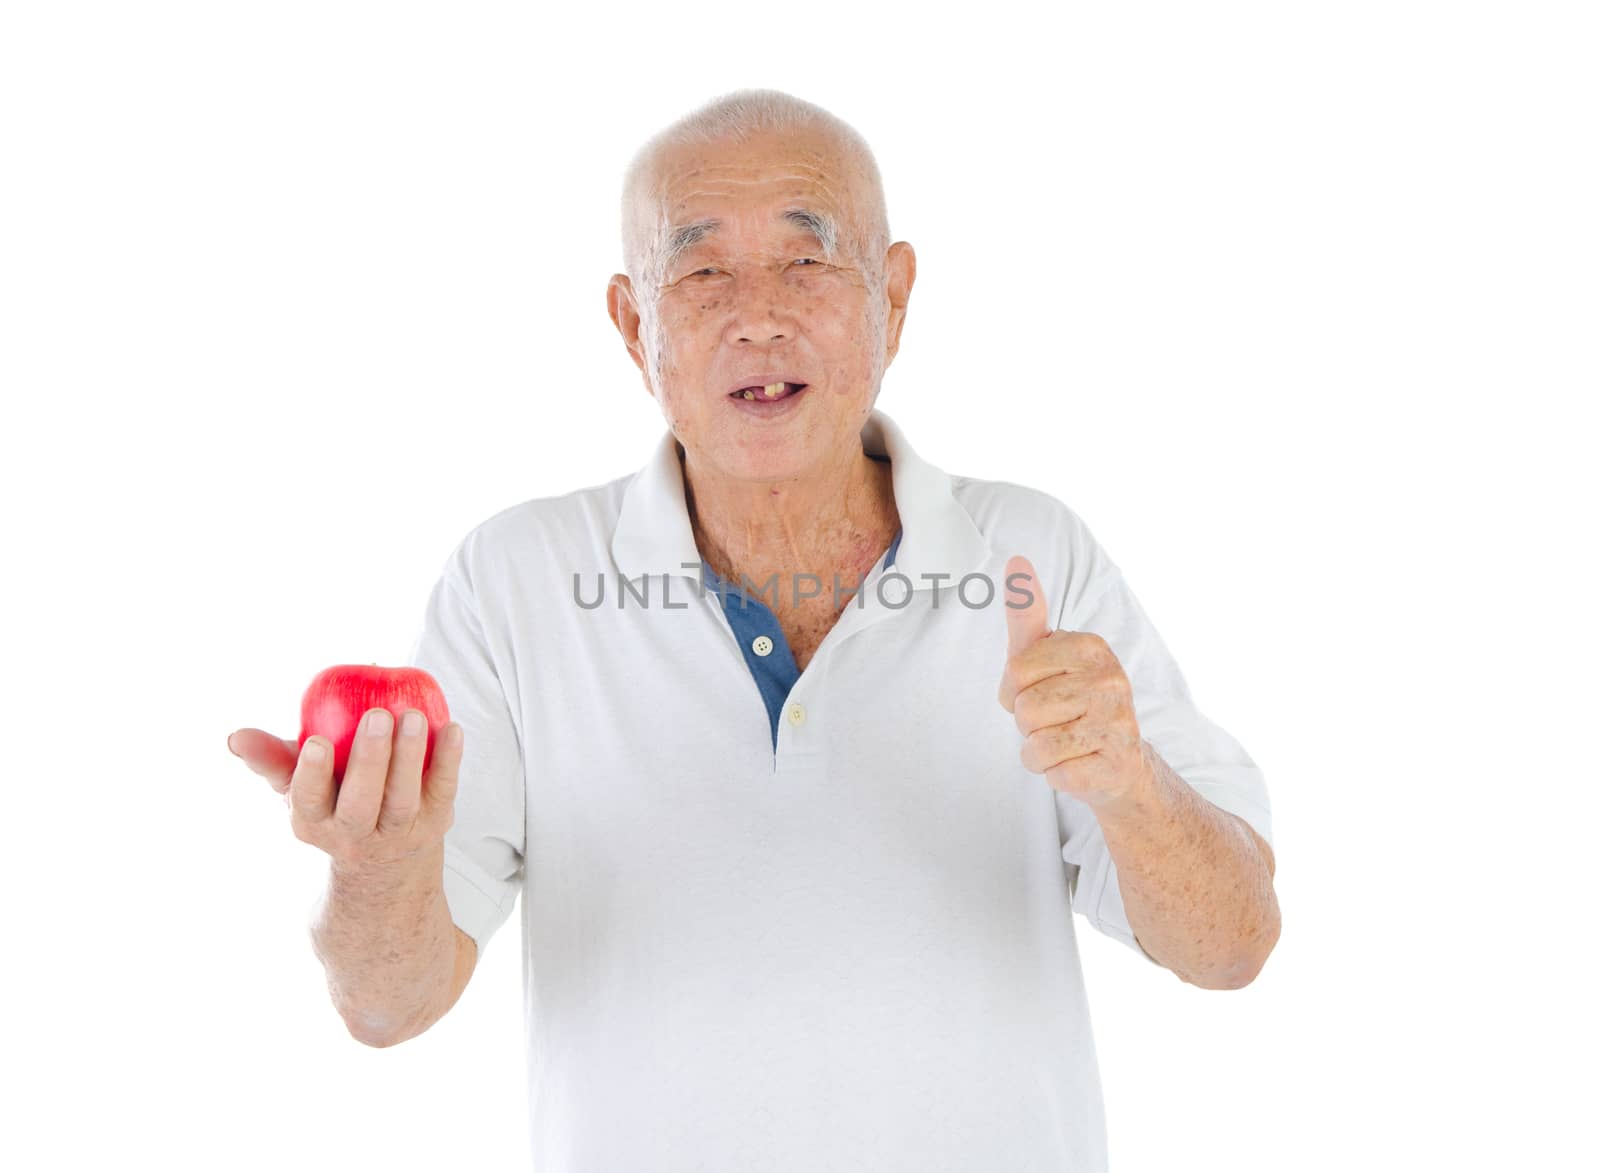 Closeup portrait senior man holding an apple, isolated on white background.